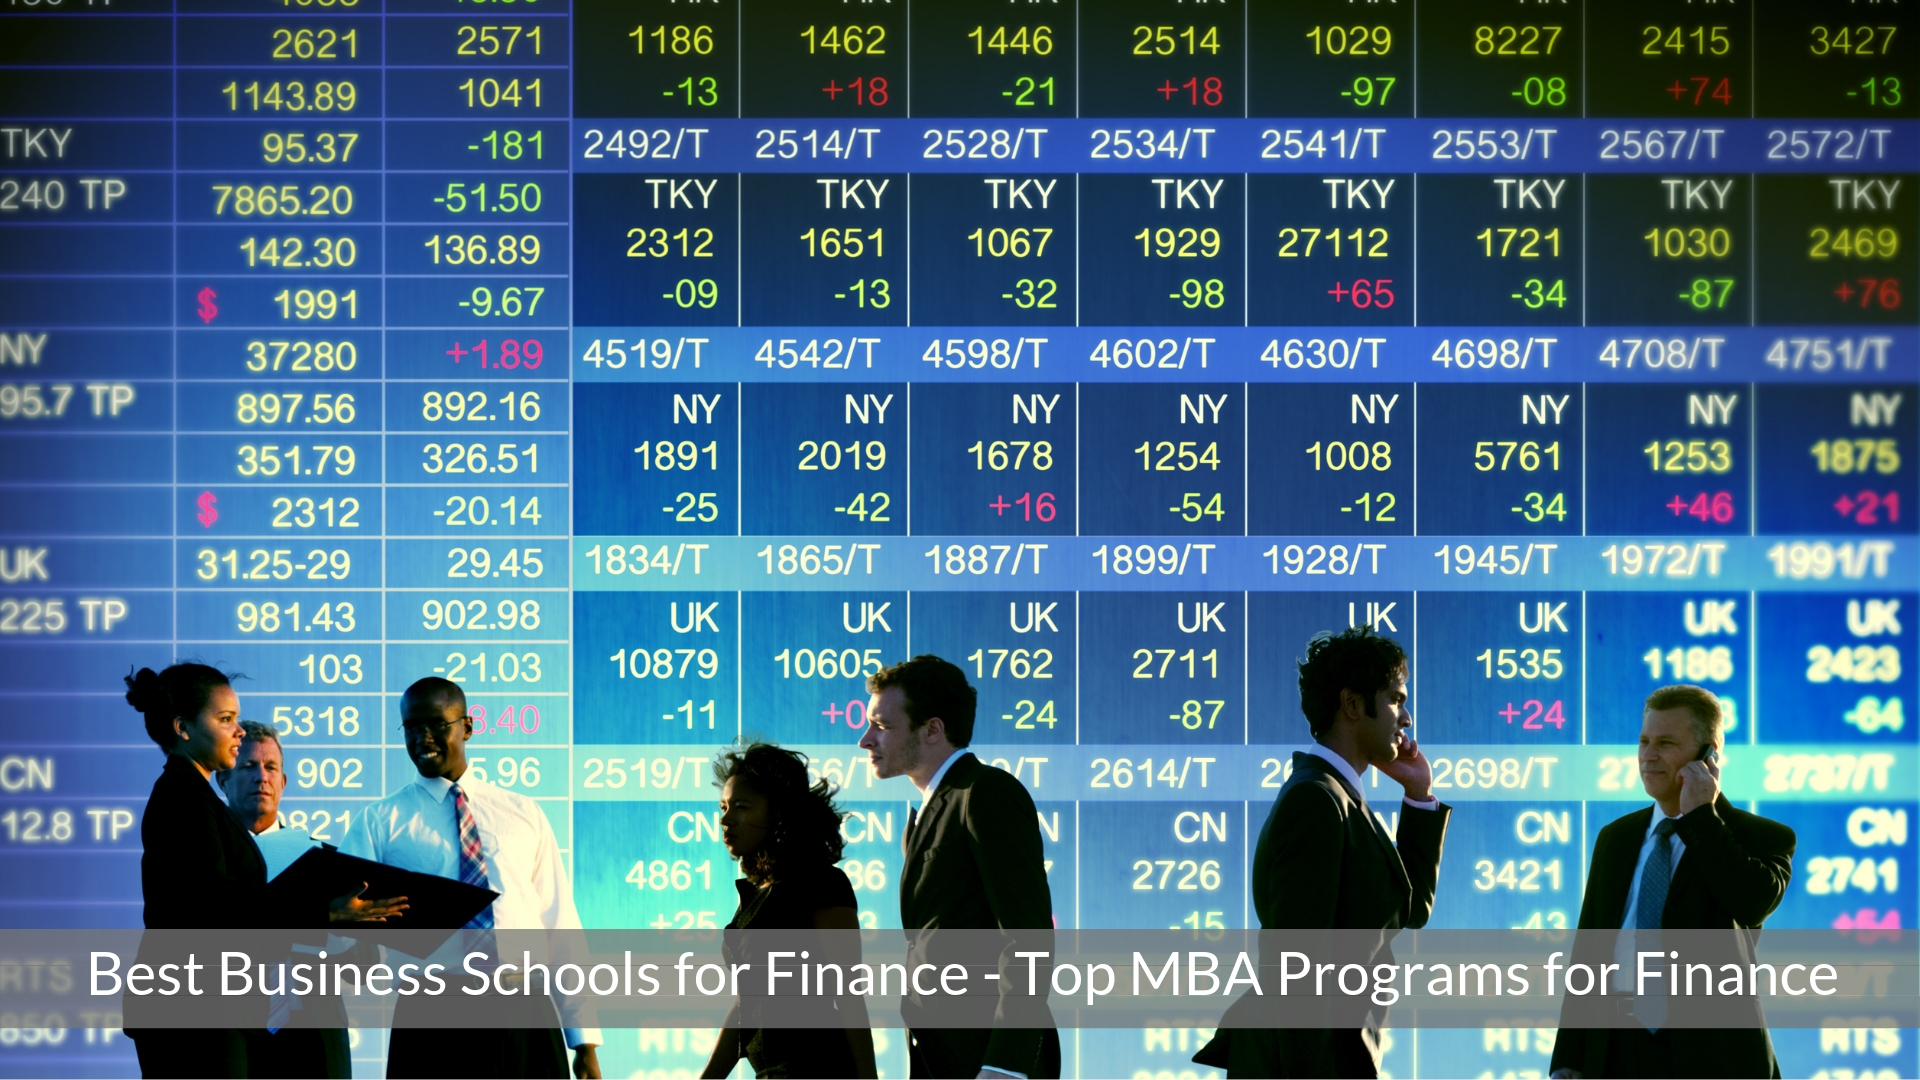 10 Best Business Schools for Finance – Top MBA Programs in 2021